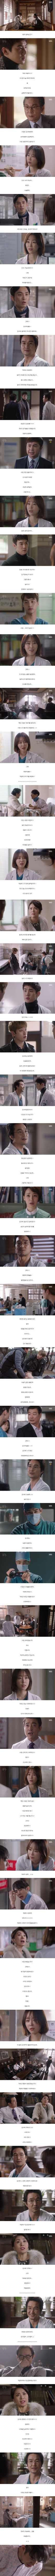 episode 11 captures for the Korean drama 'Romantic Doctor Teacher Kim'